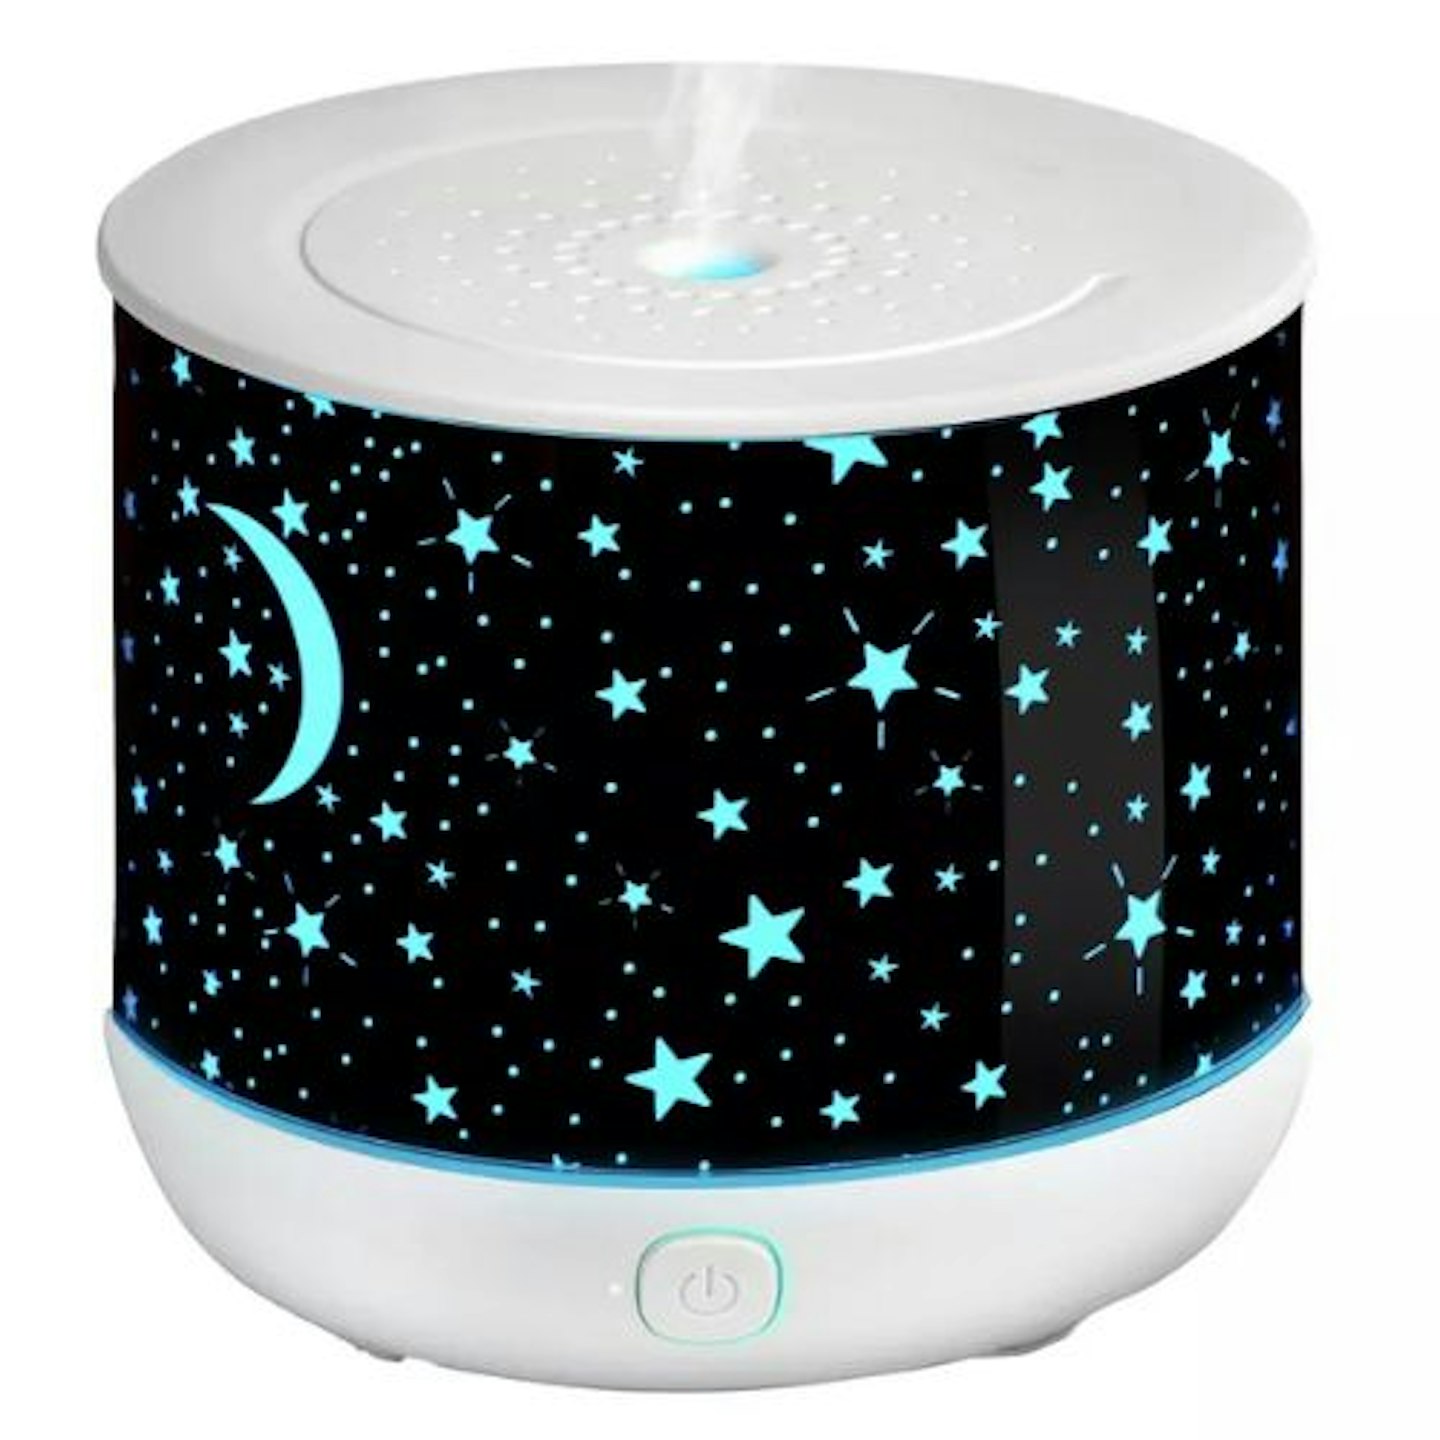 Rio Dream Time Aroma Diffuser, Humidifier and Night Light